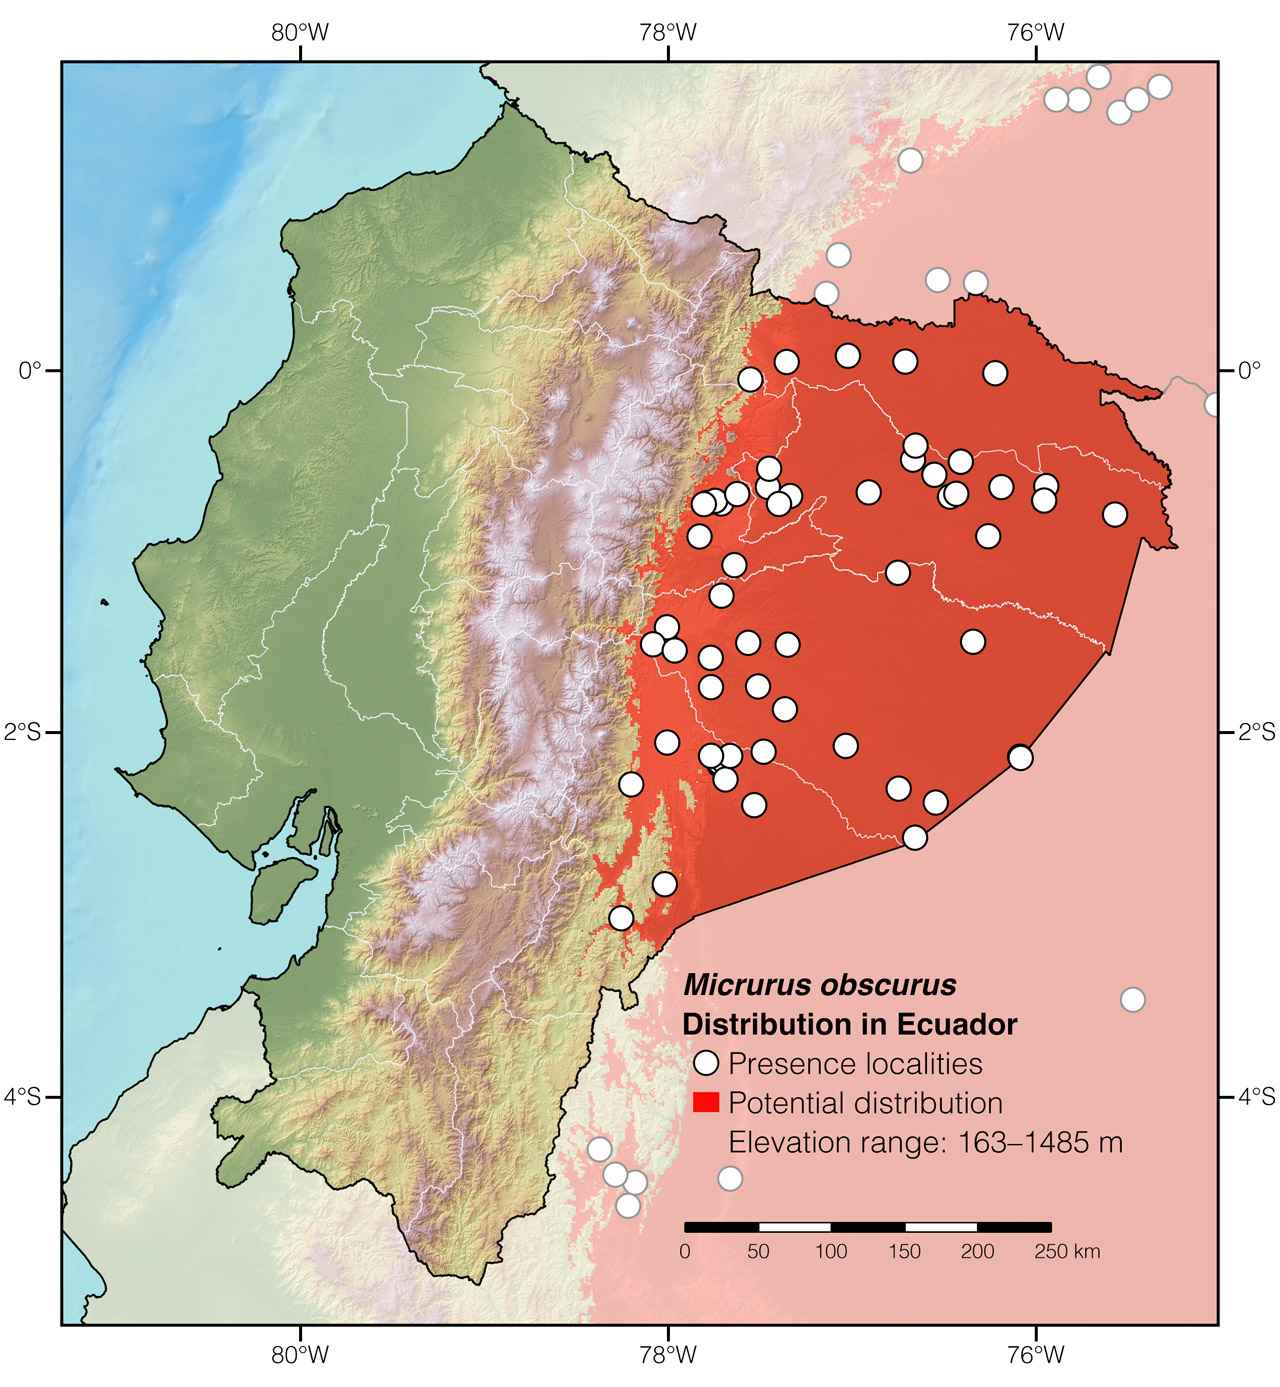 Distribution of Micrurus obscurus in Ecuador